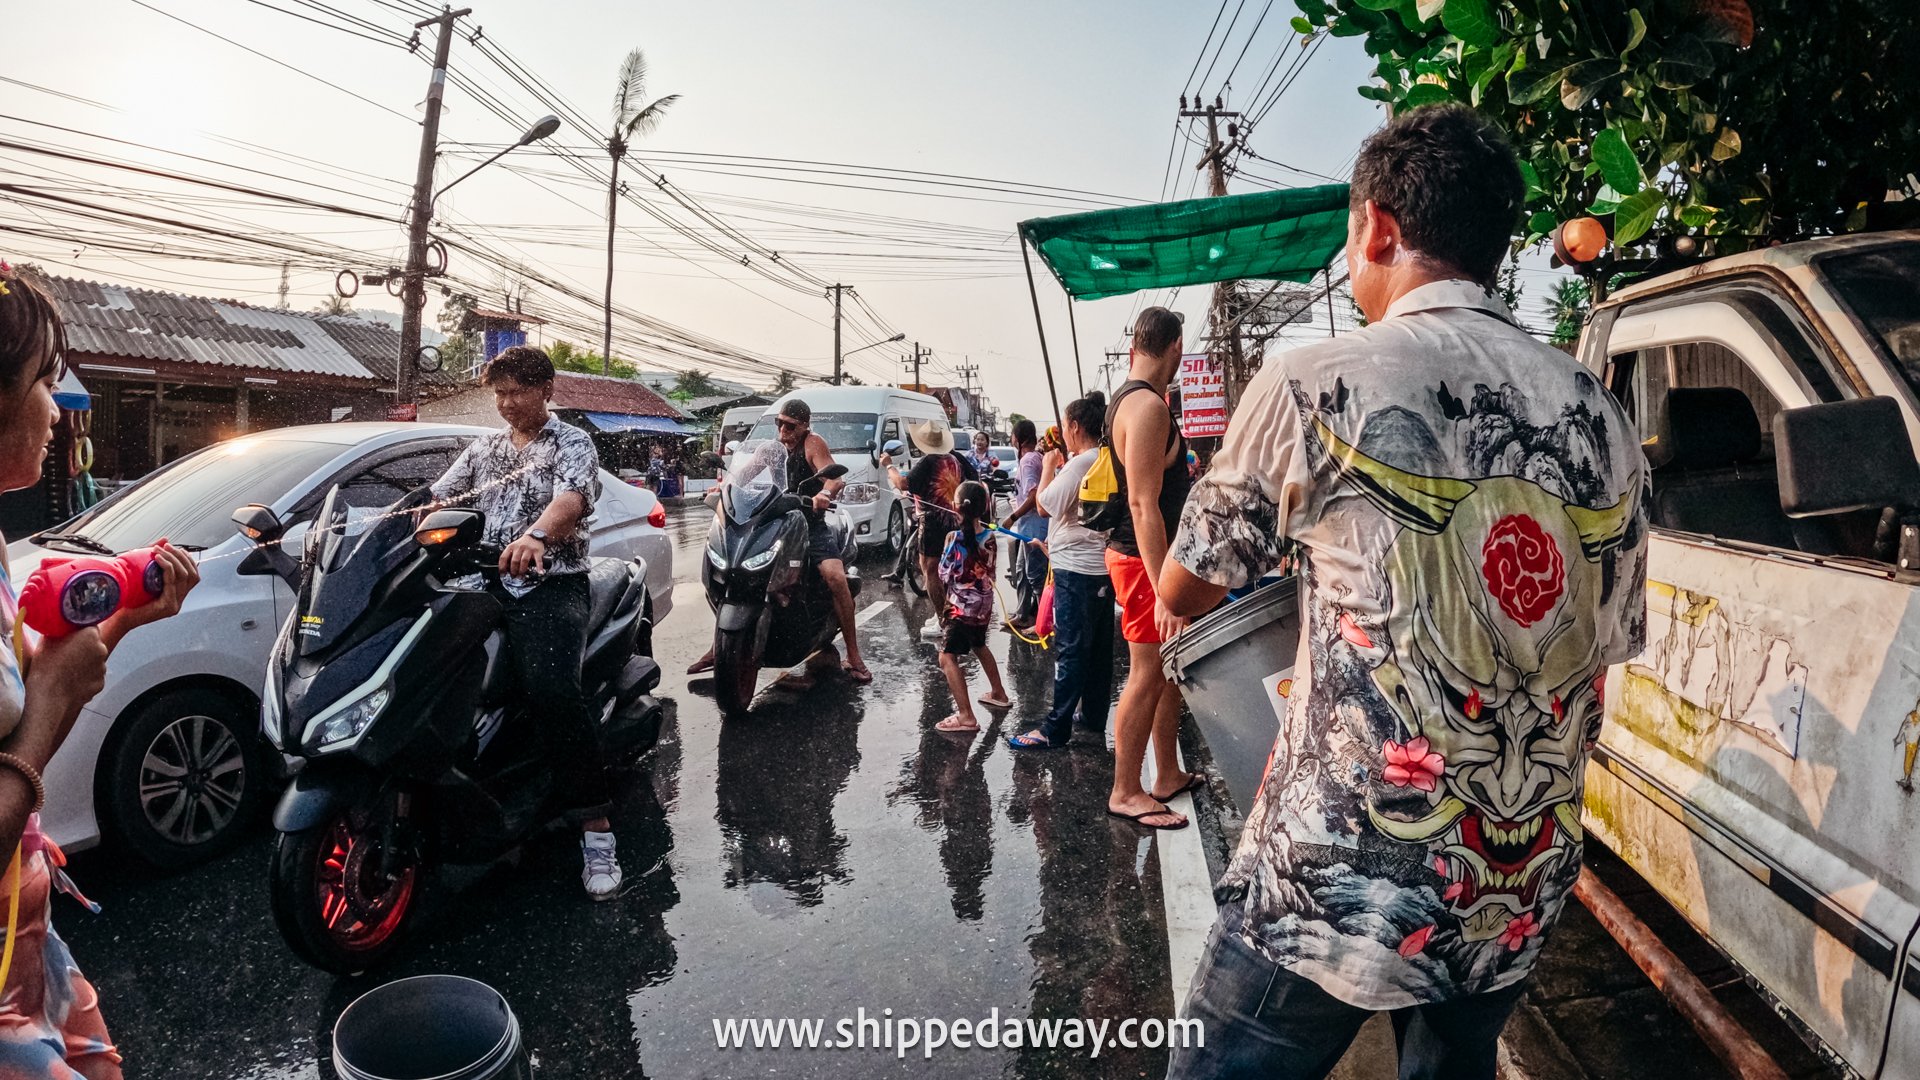 Locals splashing water on roadside during Songkran Festival Thailand - Thai New Year Water Fight